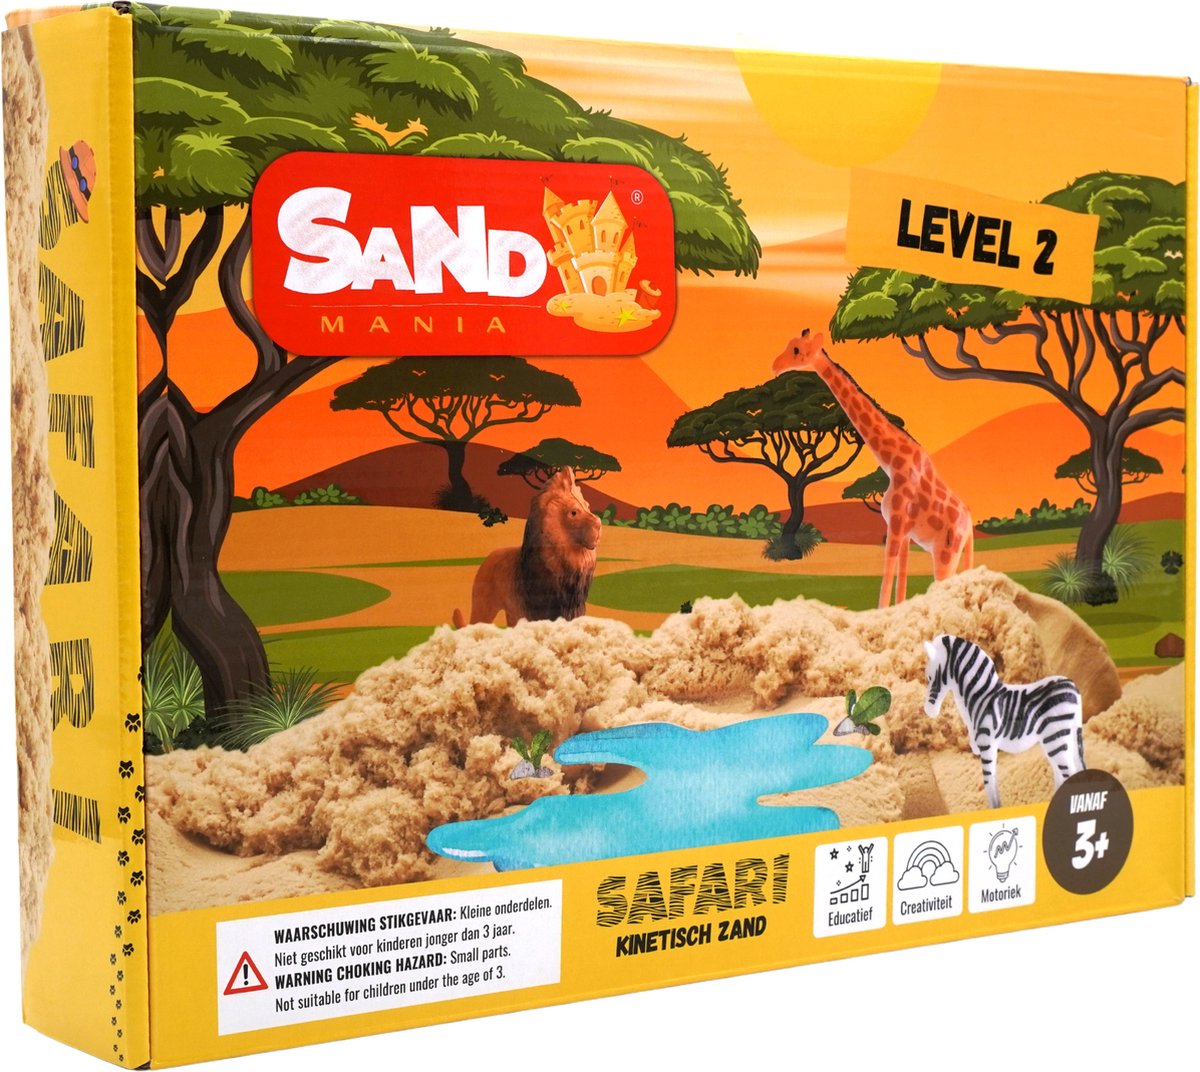 Sand mania® - Kinetisch zand - Safari level 2 box - 1,5 kg bruin magisch zand - Speelzand met zandbak - Magic sand - Montessori speelgoed